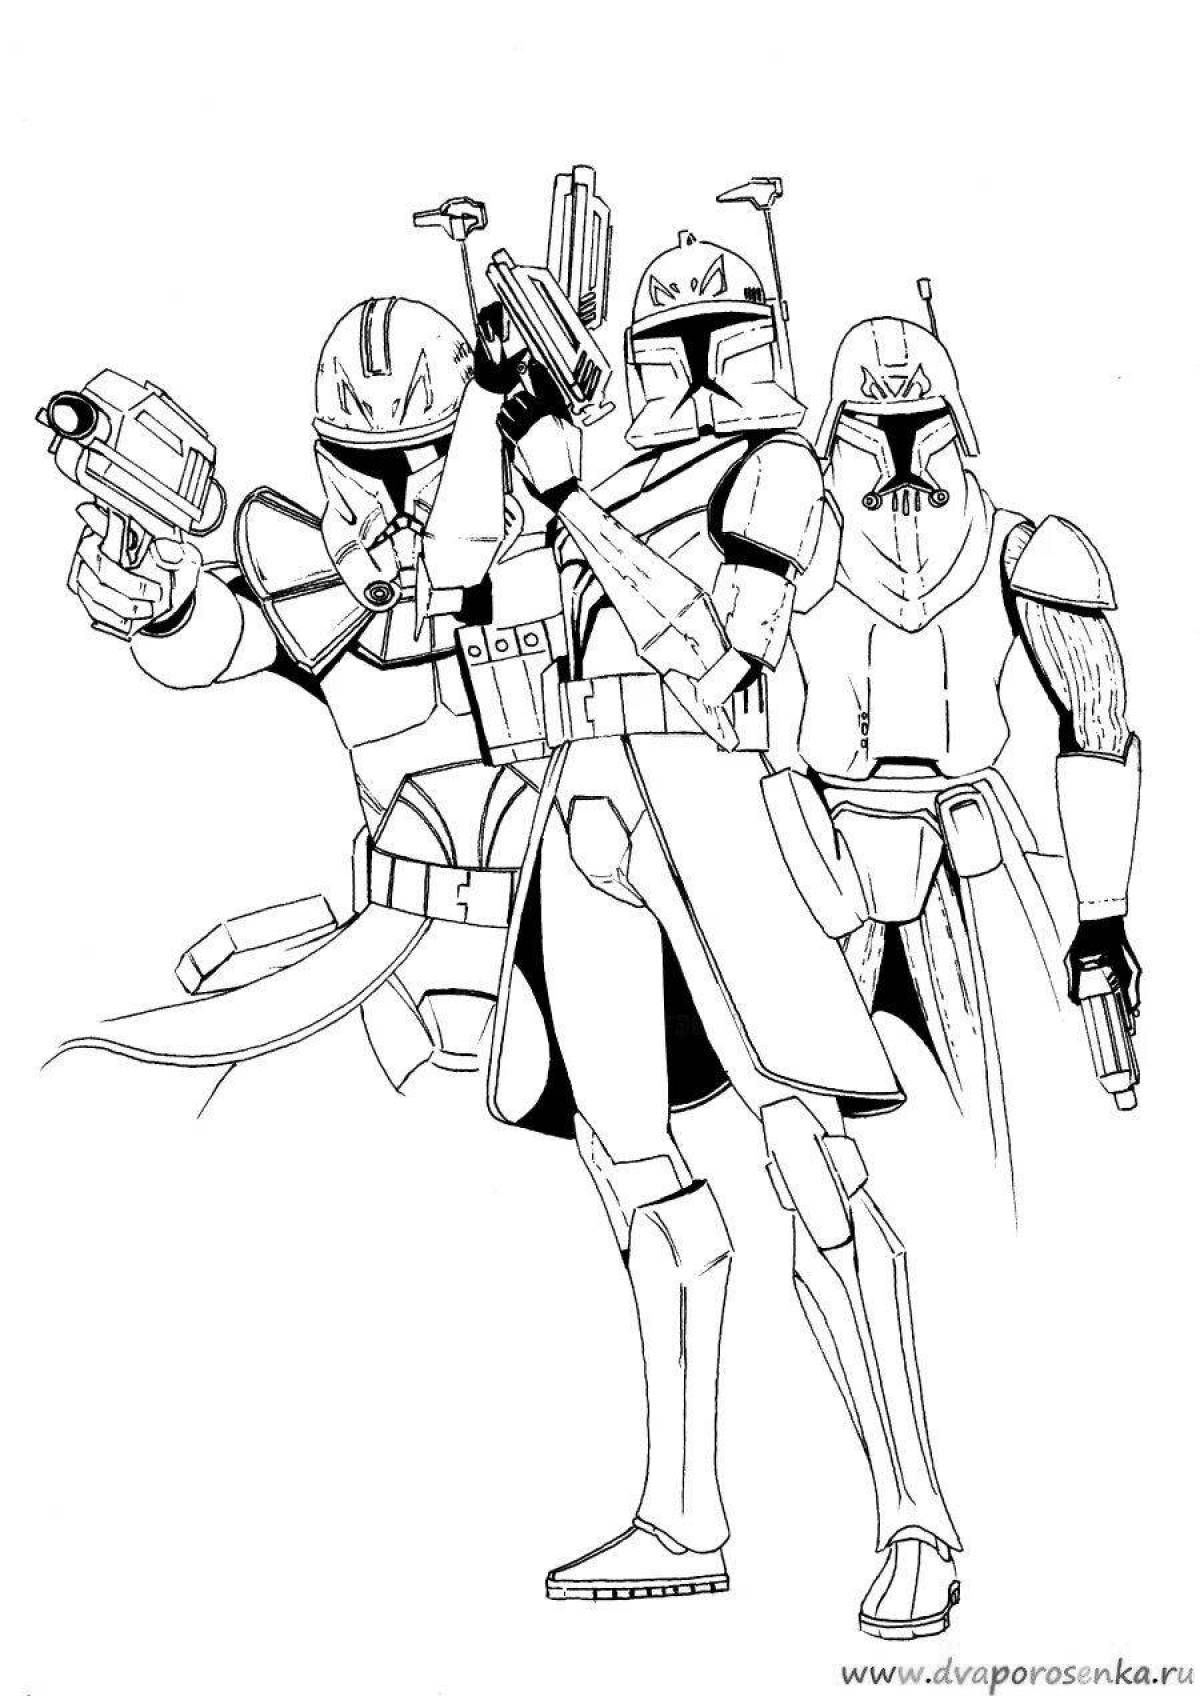 Coloring Star Wars clones